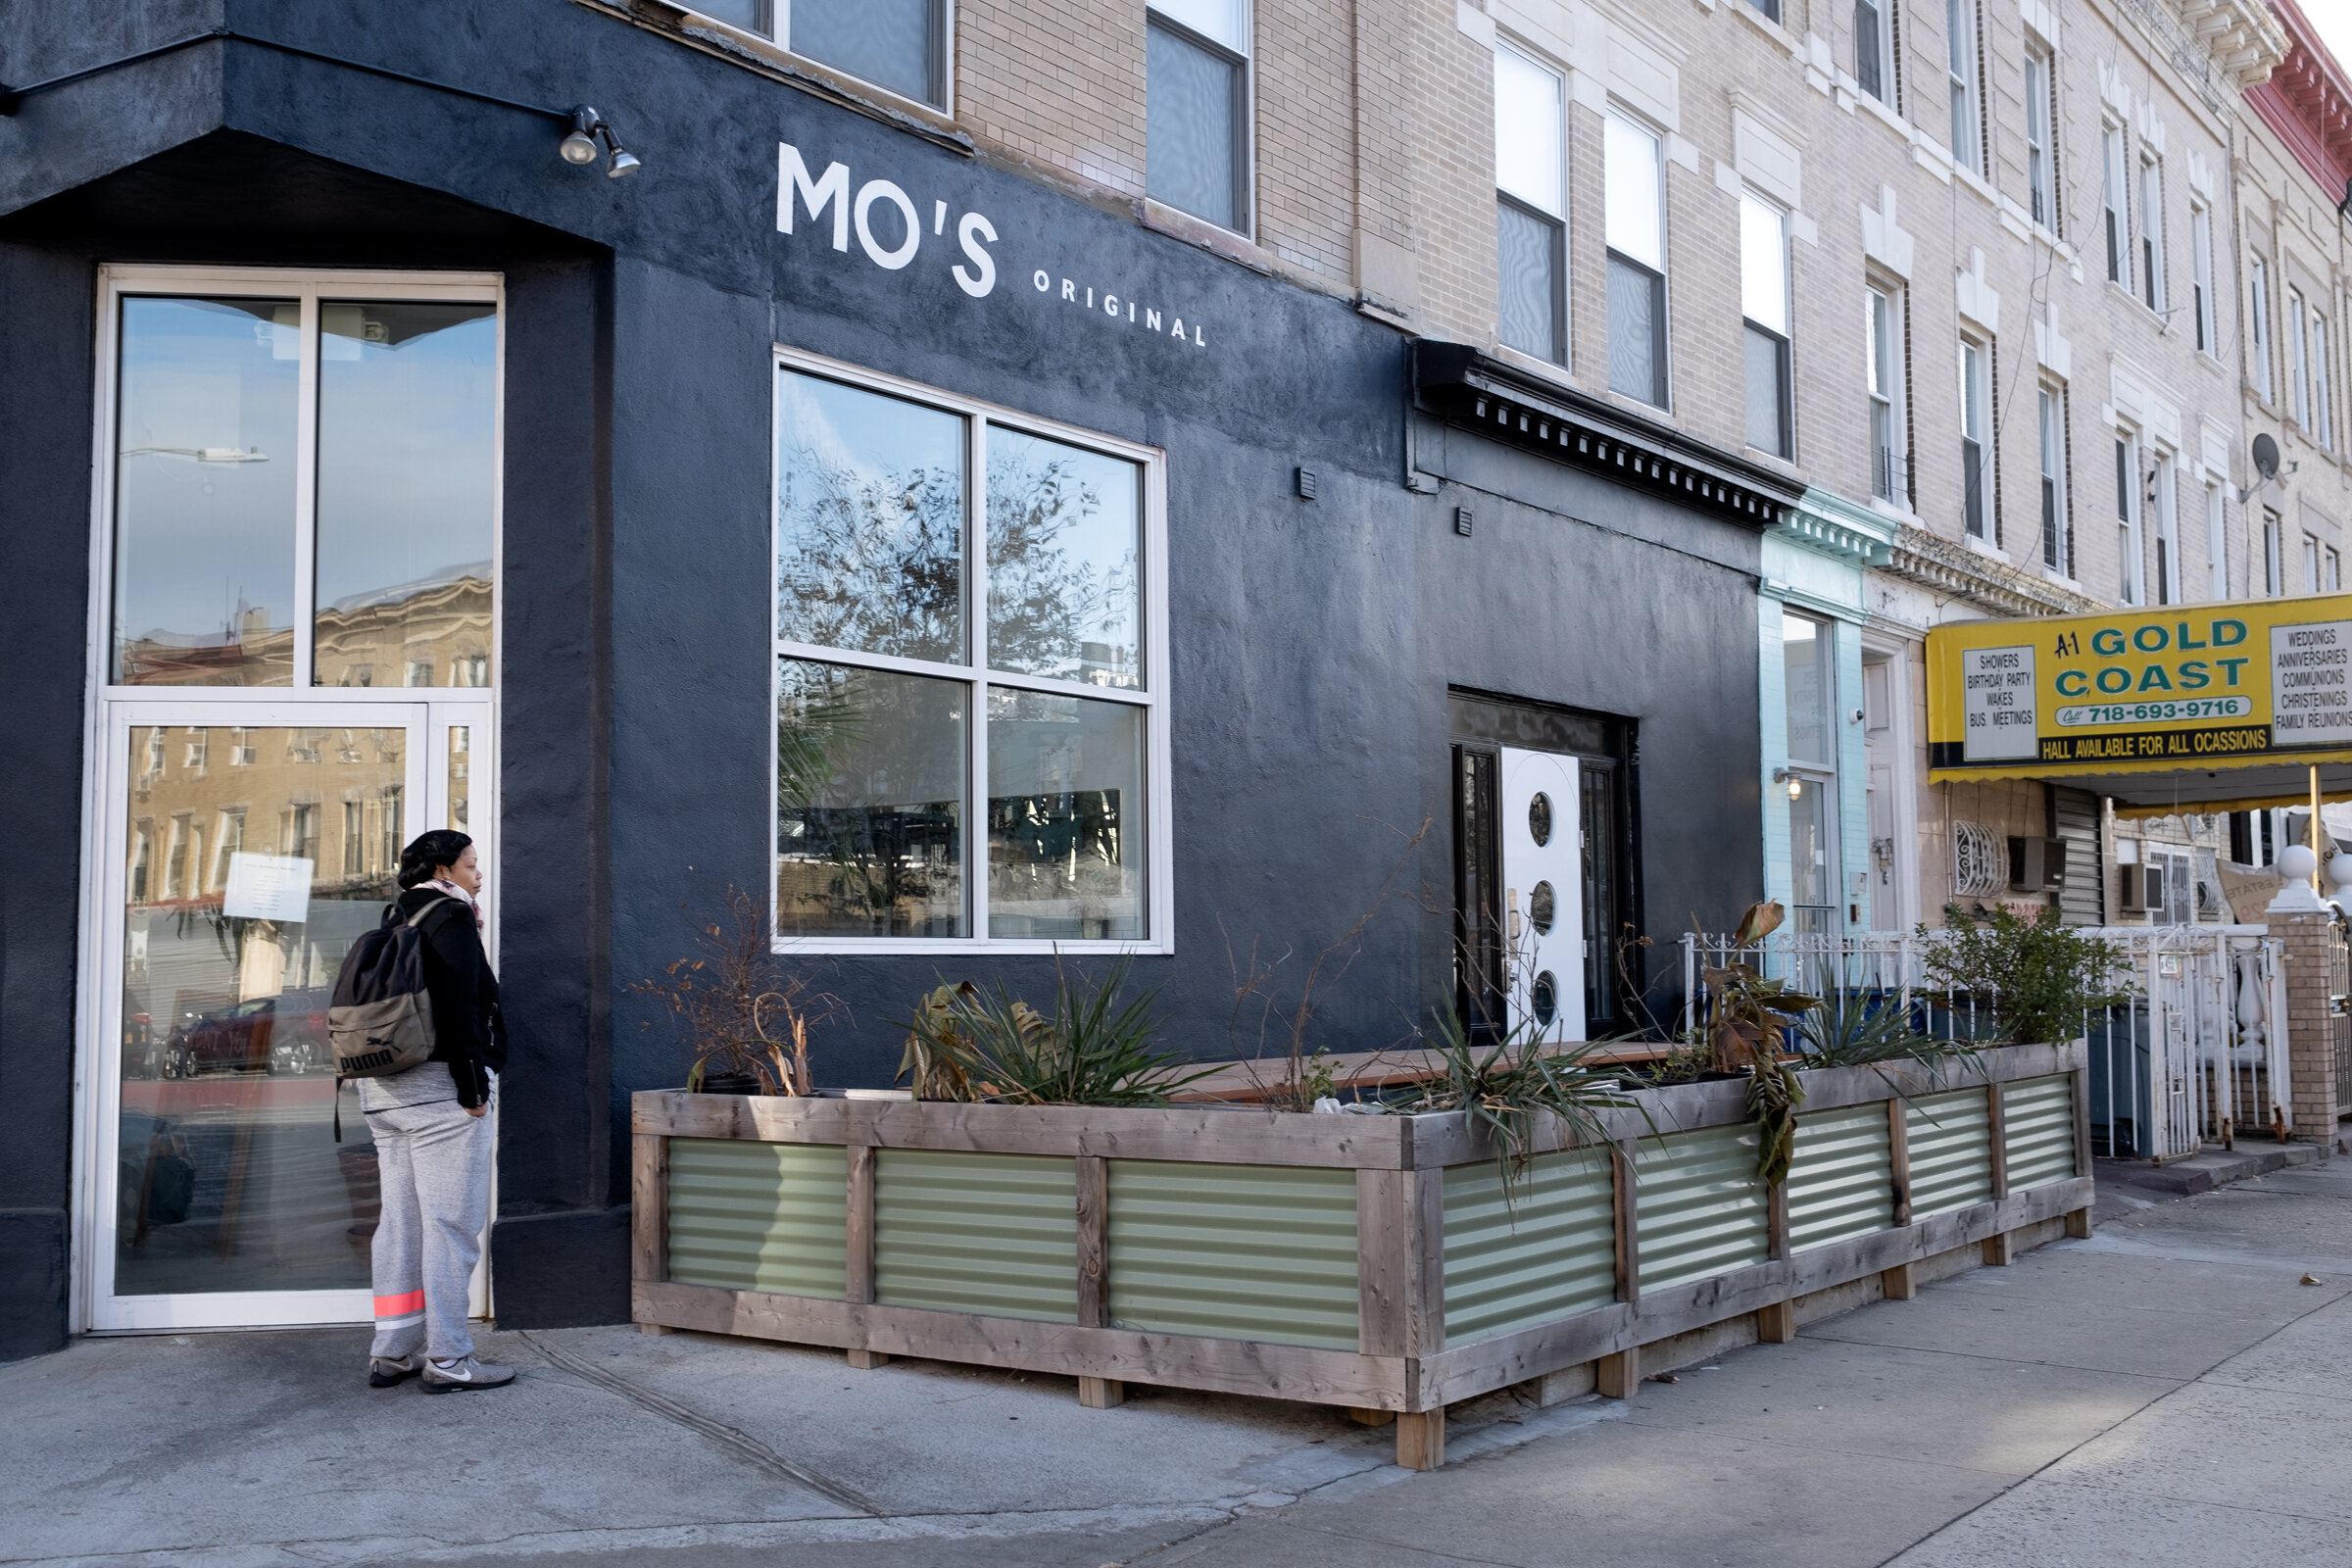 Mo’s Original, a Japanese-Caribbean ramen restaurant. Brooklyn, NY (2019)